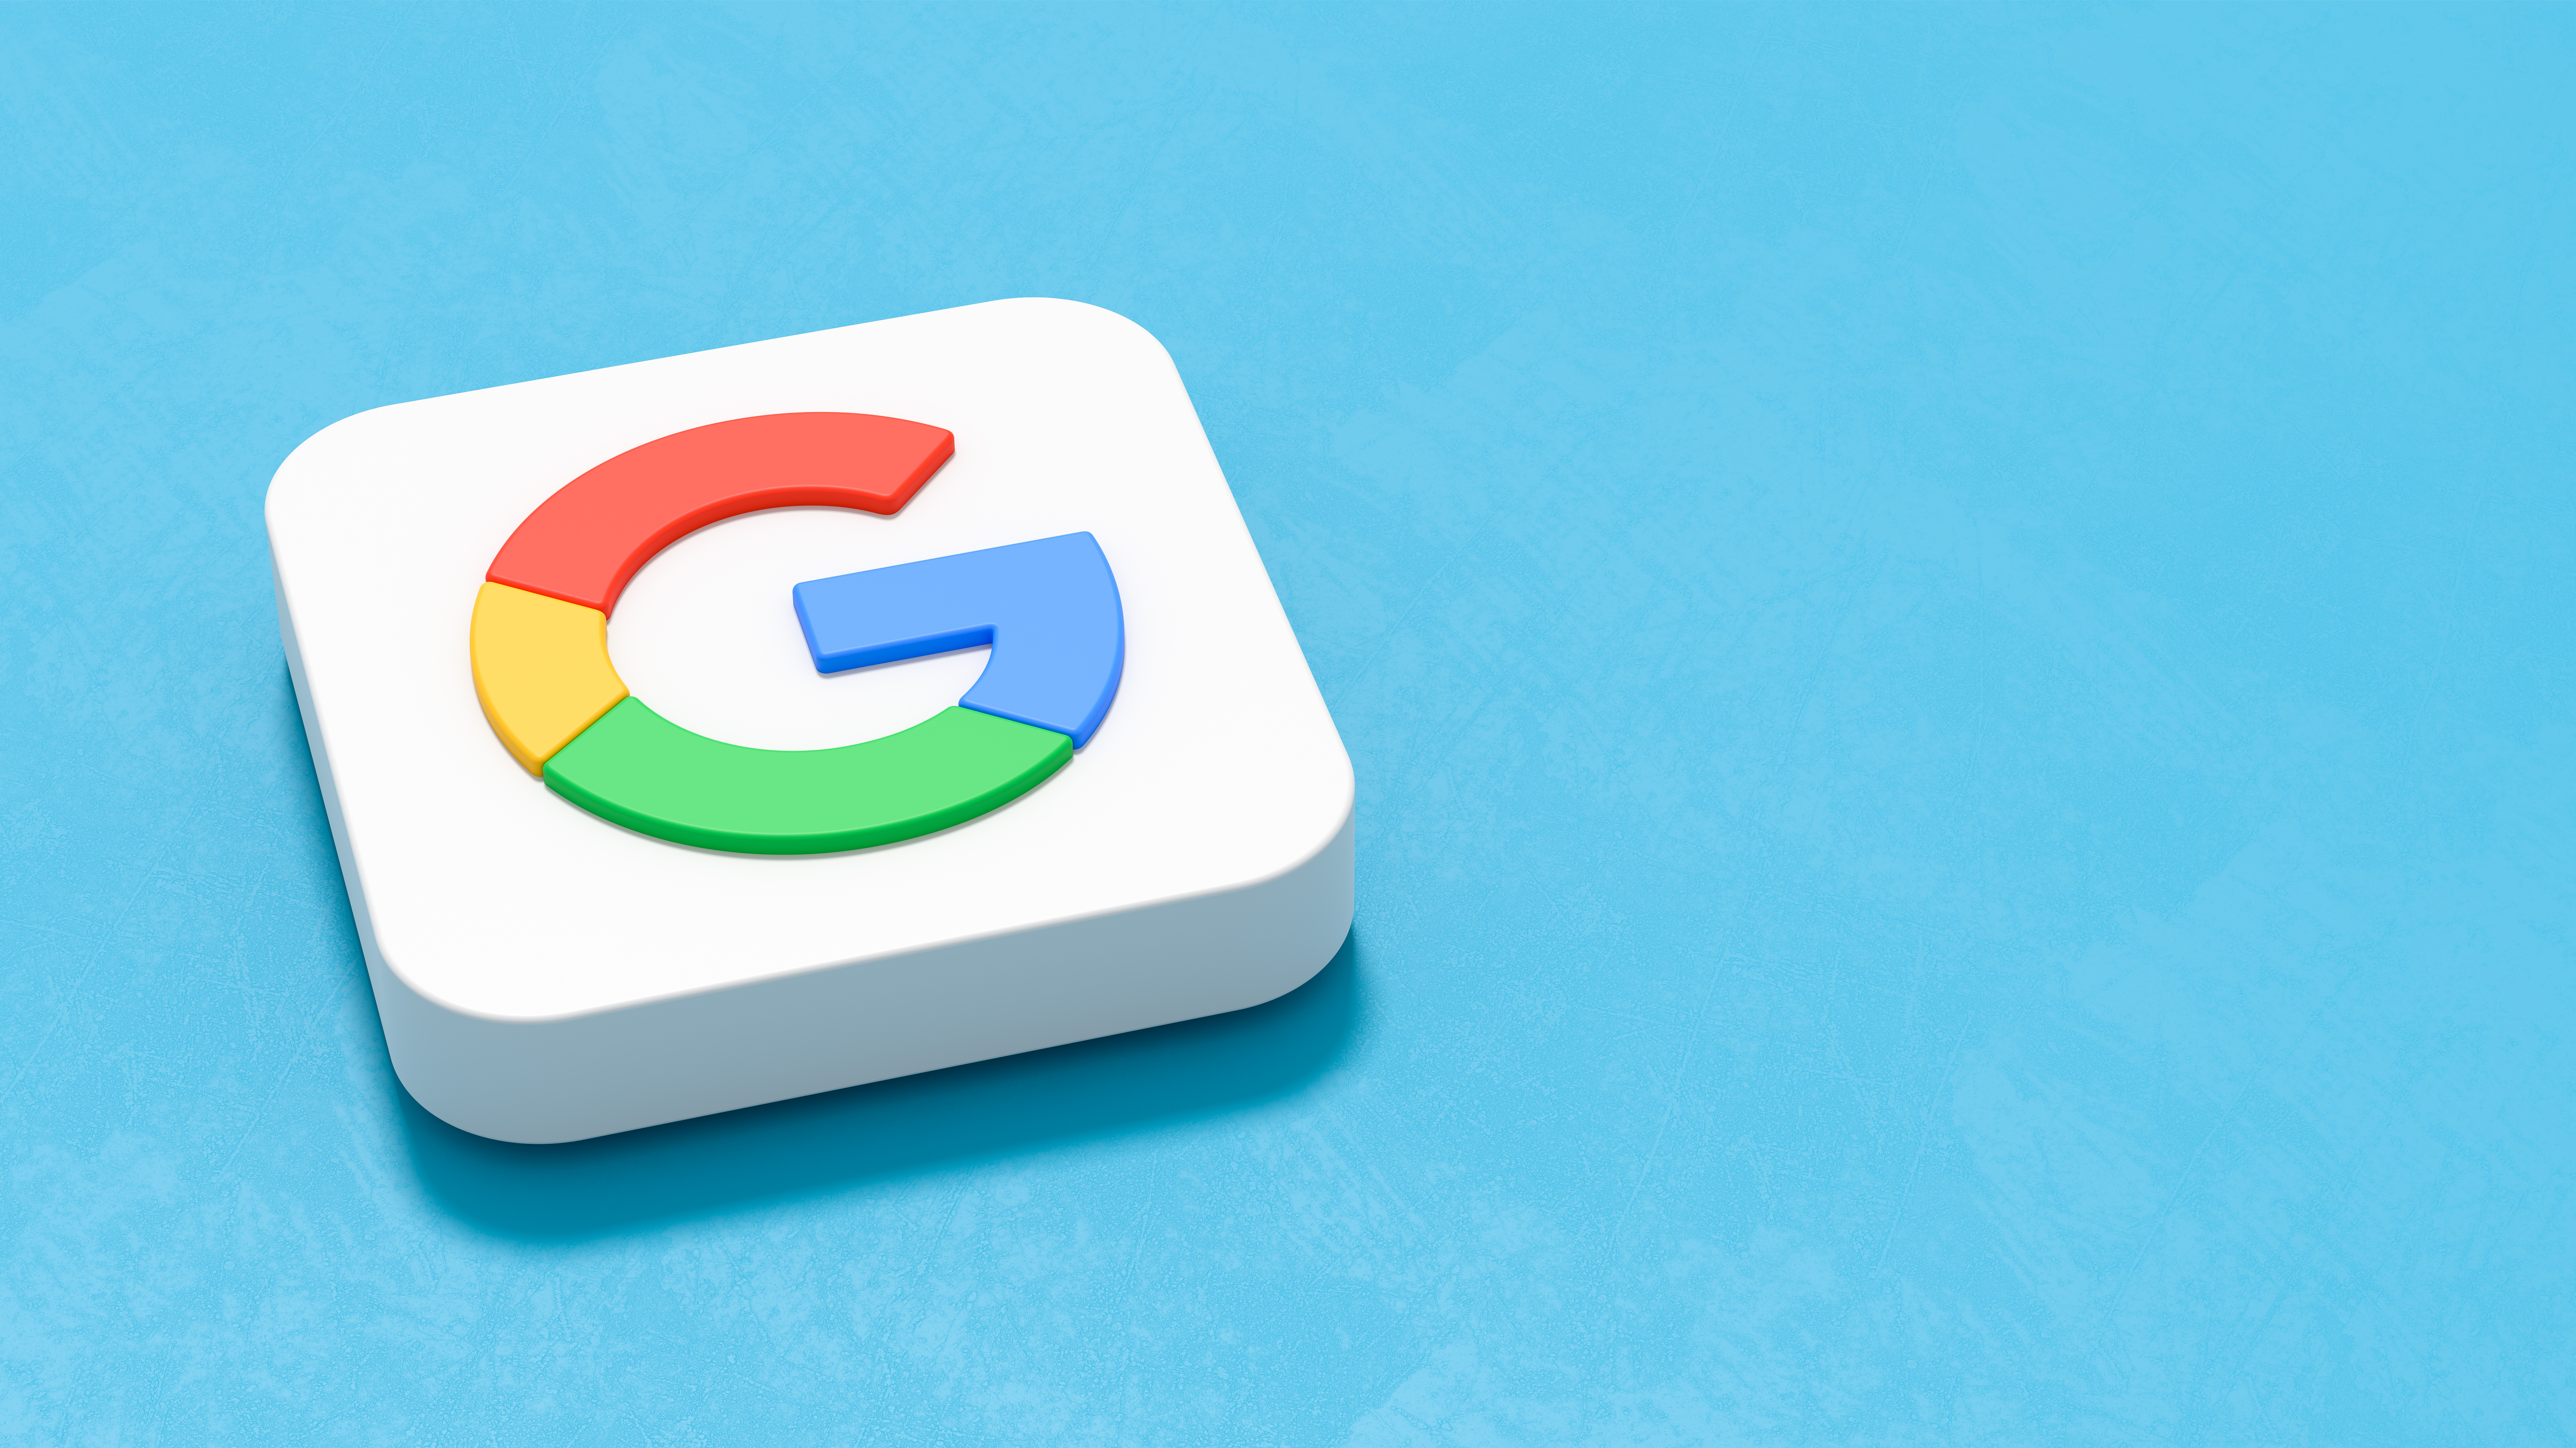 Google App Icon 3D Symbol Shape on Plastered Blue Background with Copy Space 3D Render Illustration